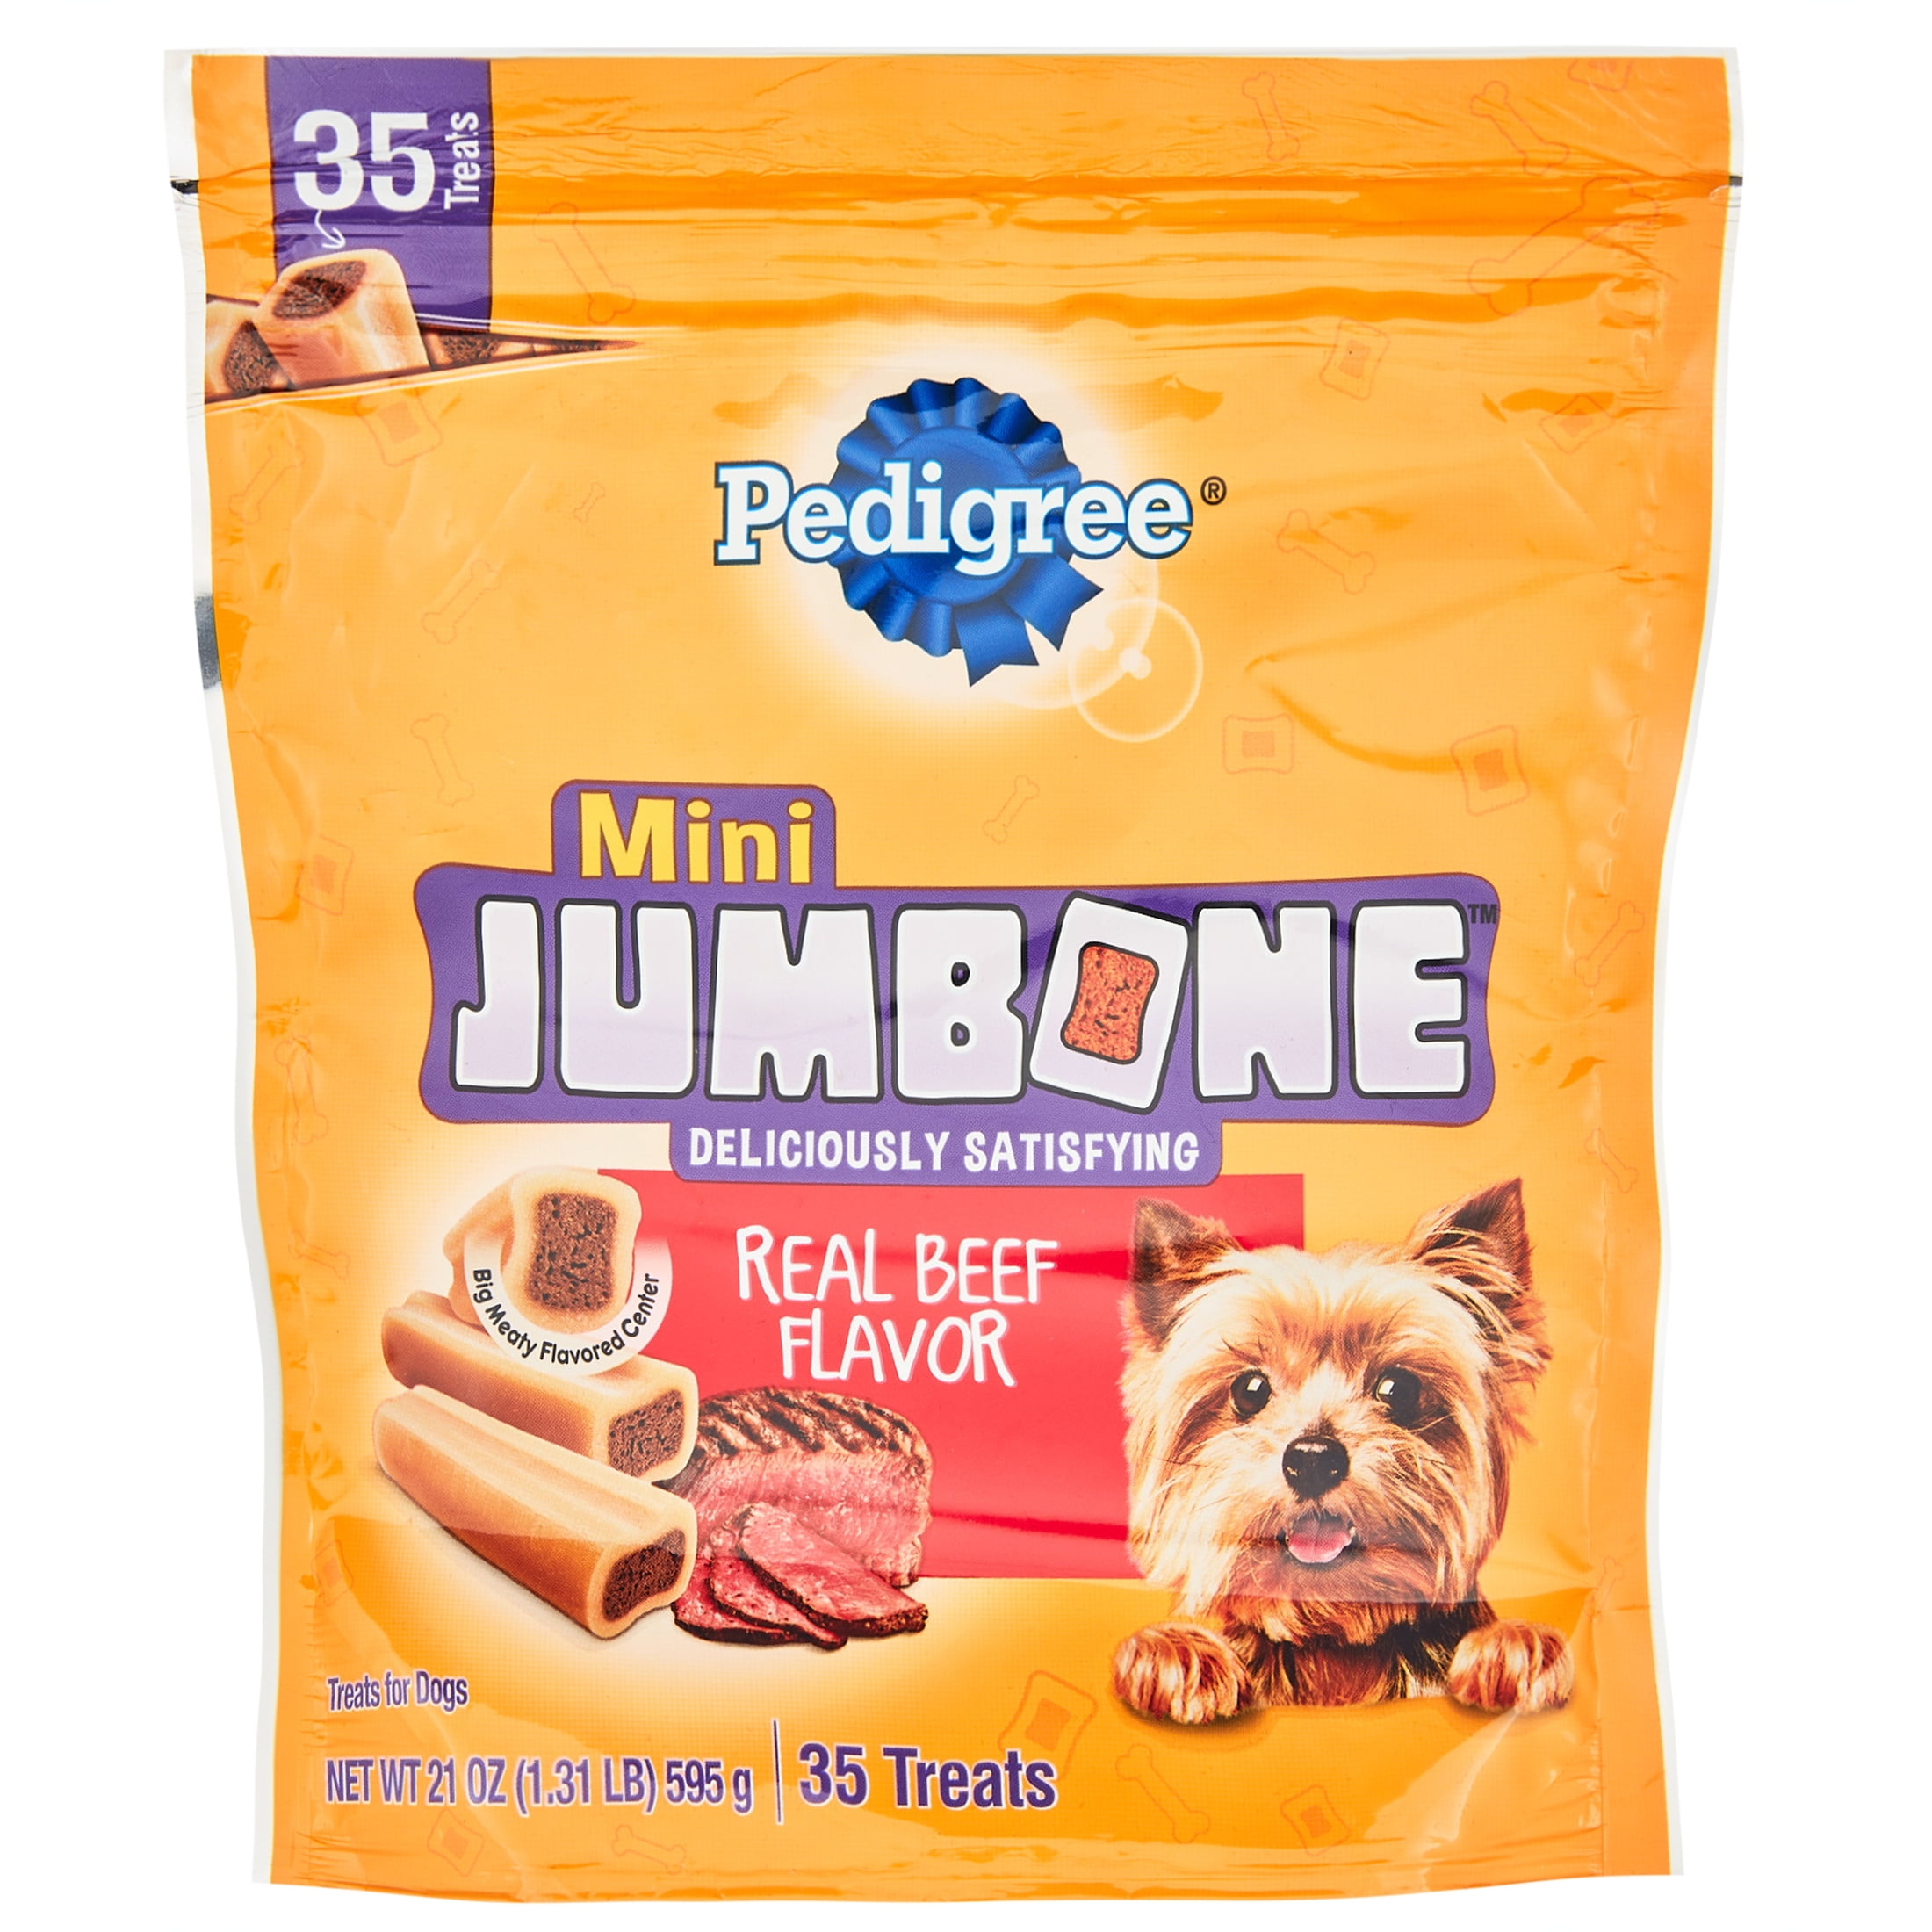 Pedigree Mini Jumbone Real Beef Flavor Dental Treats for Dogs , 21 oz. Pack (35 Treats)